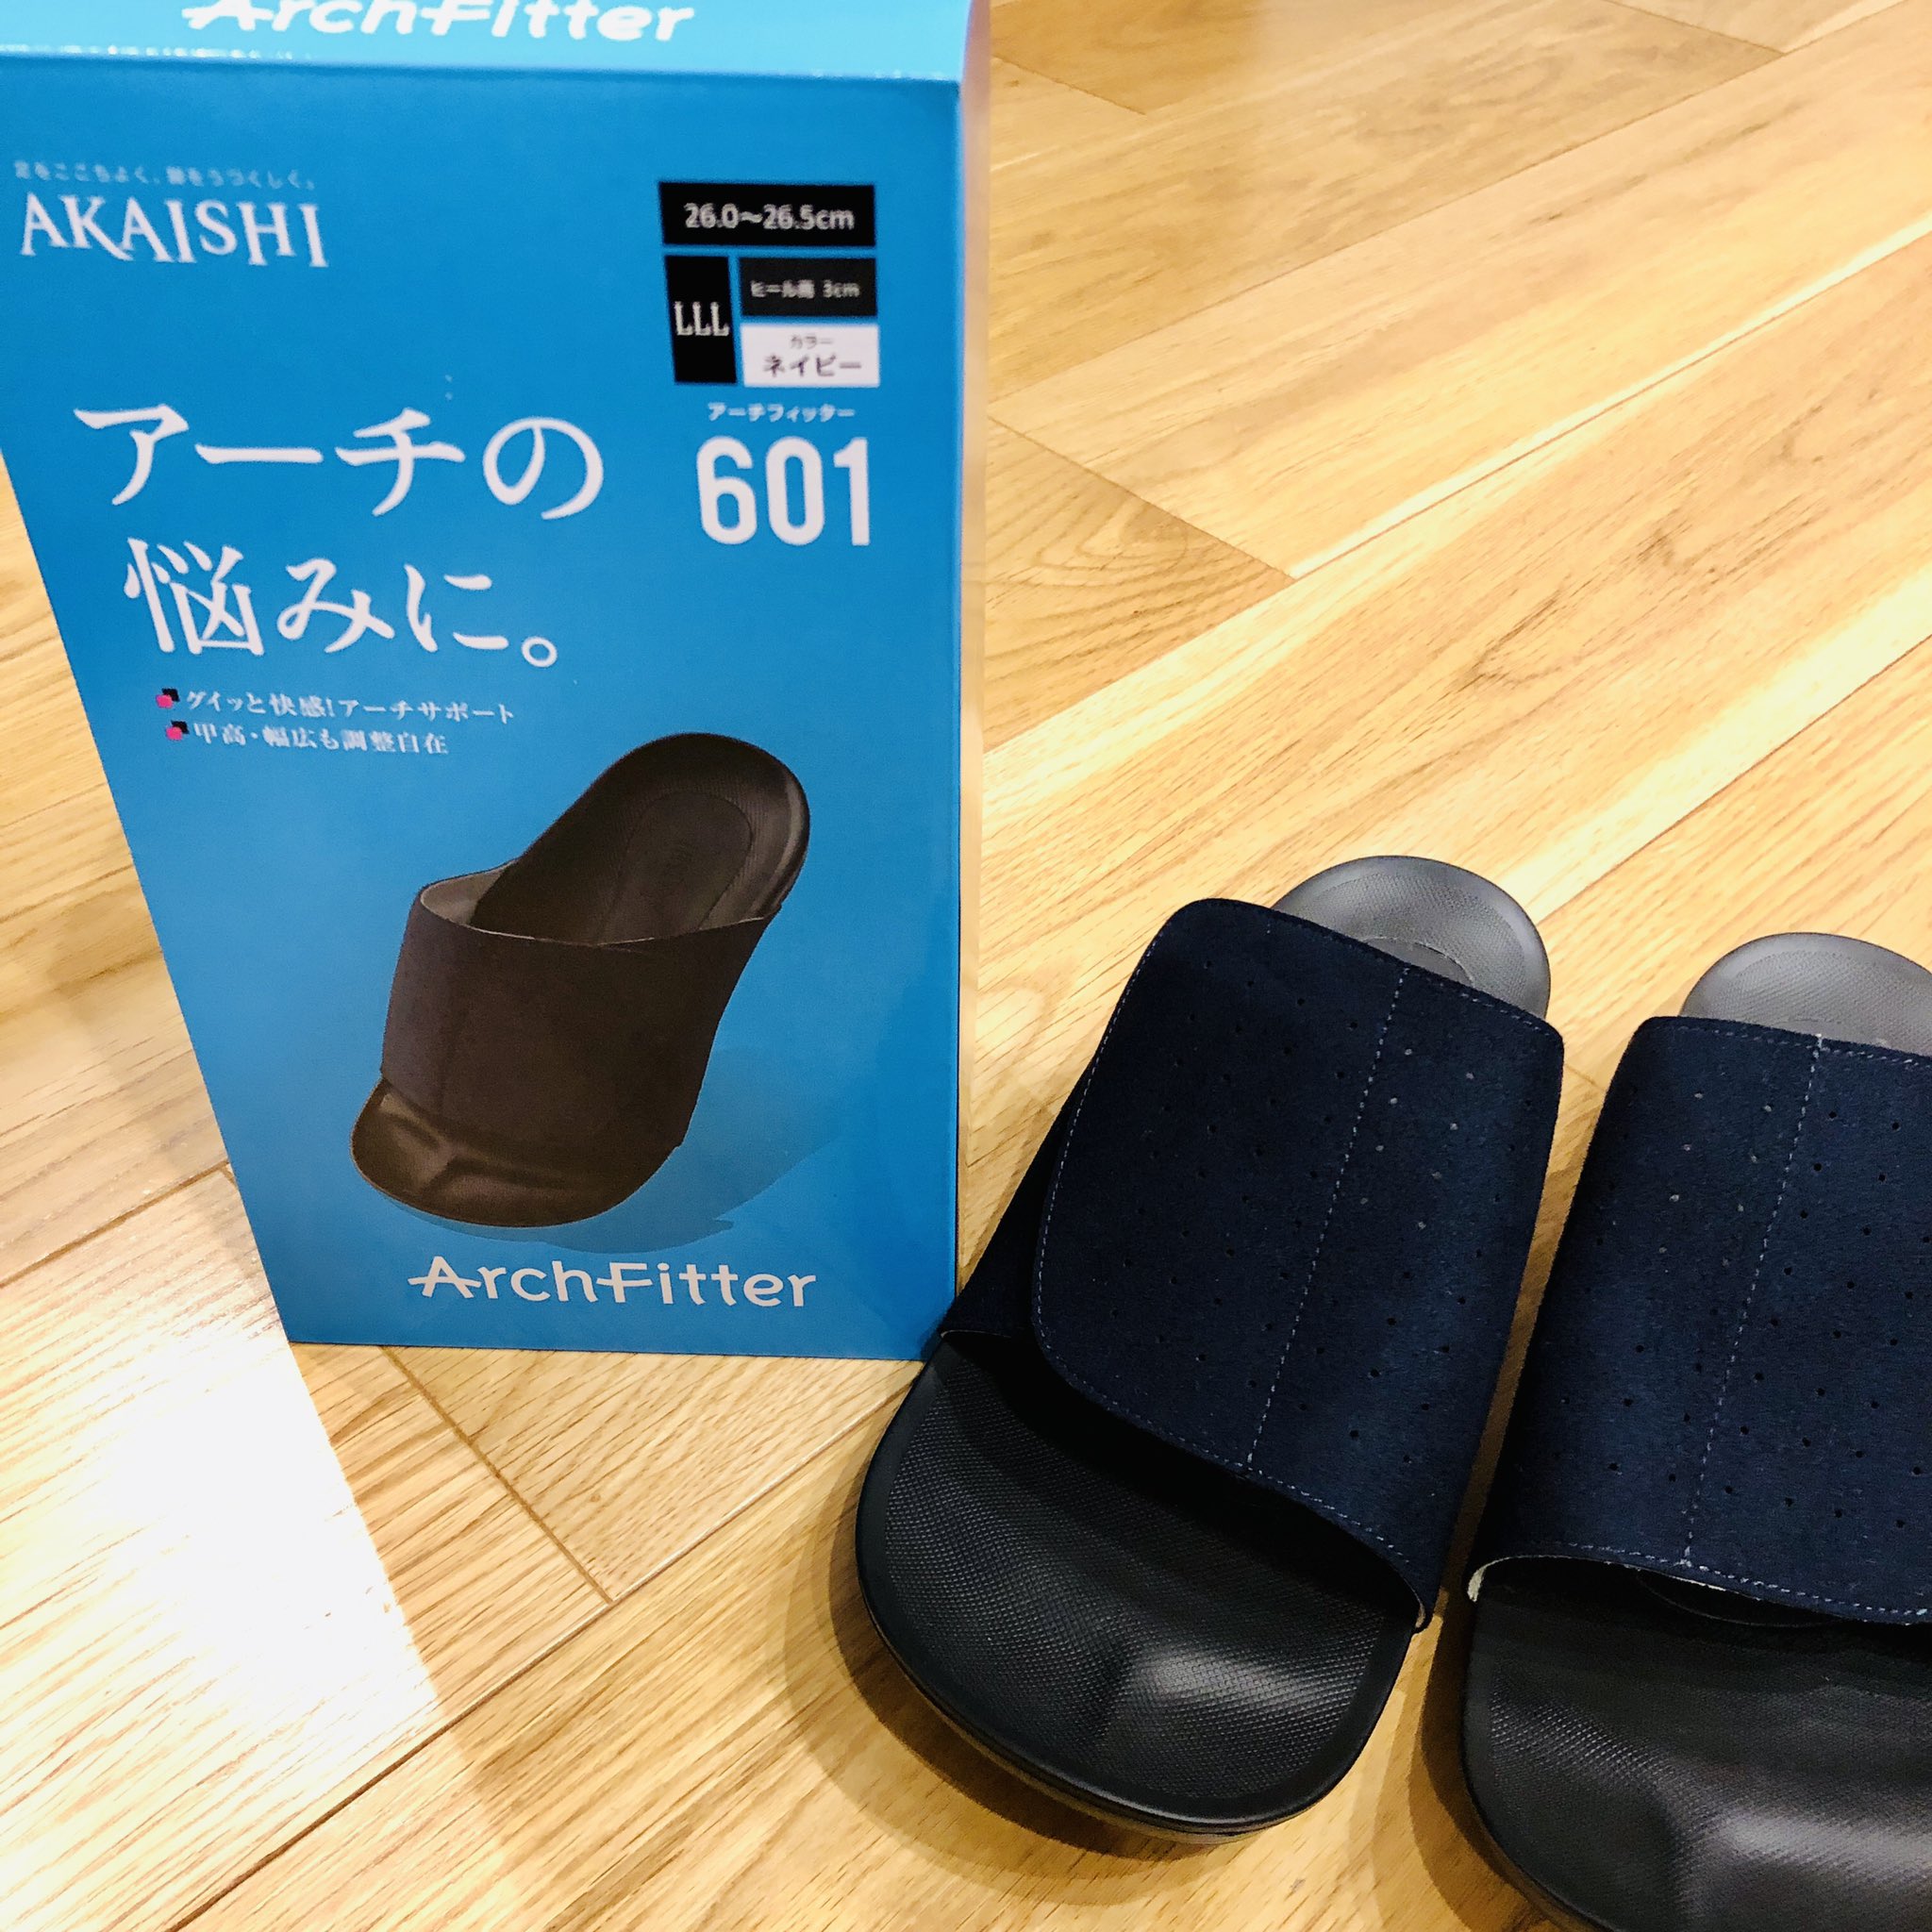 AKAISHI【公式】@足の悩みを靴で解決 (@archfitter_now) / Twitter